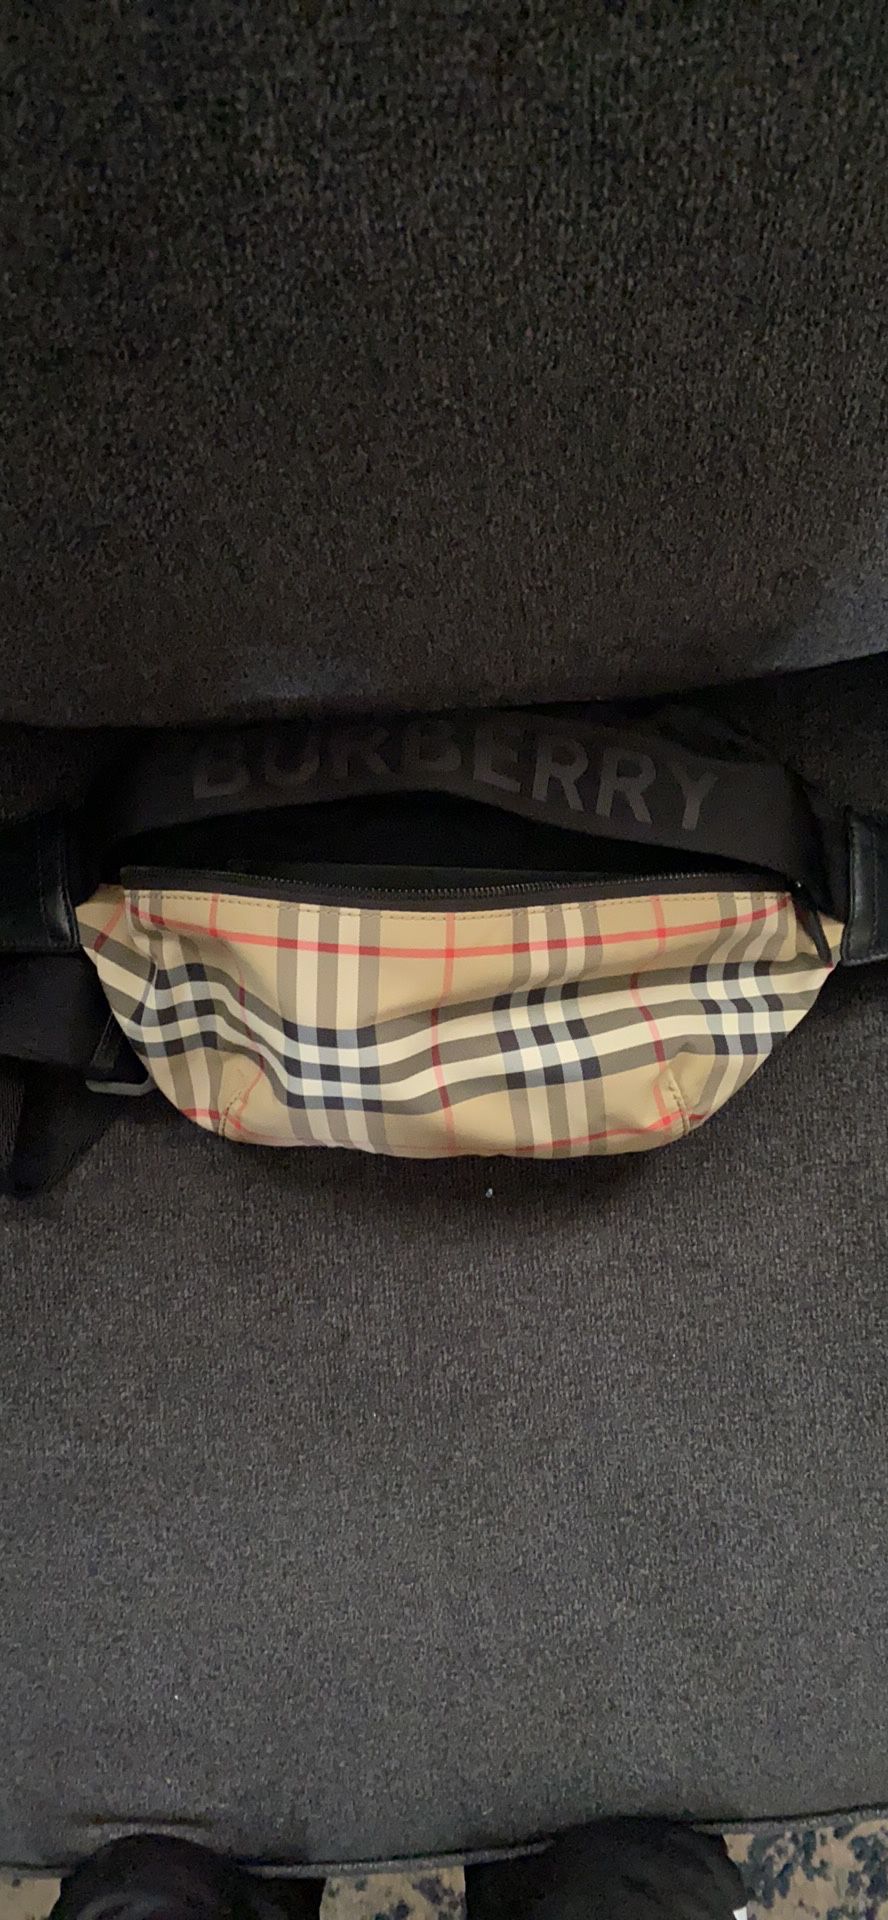 Authentic Burberry Bag